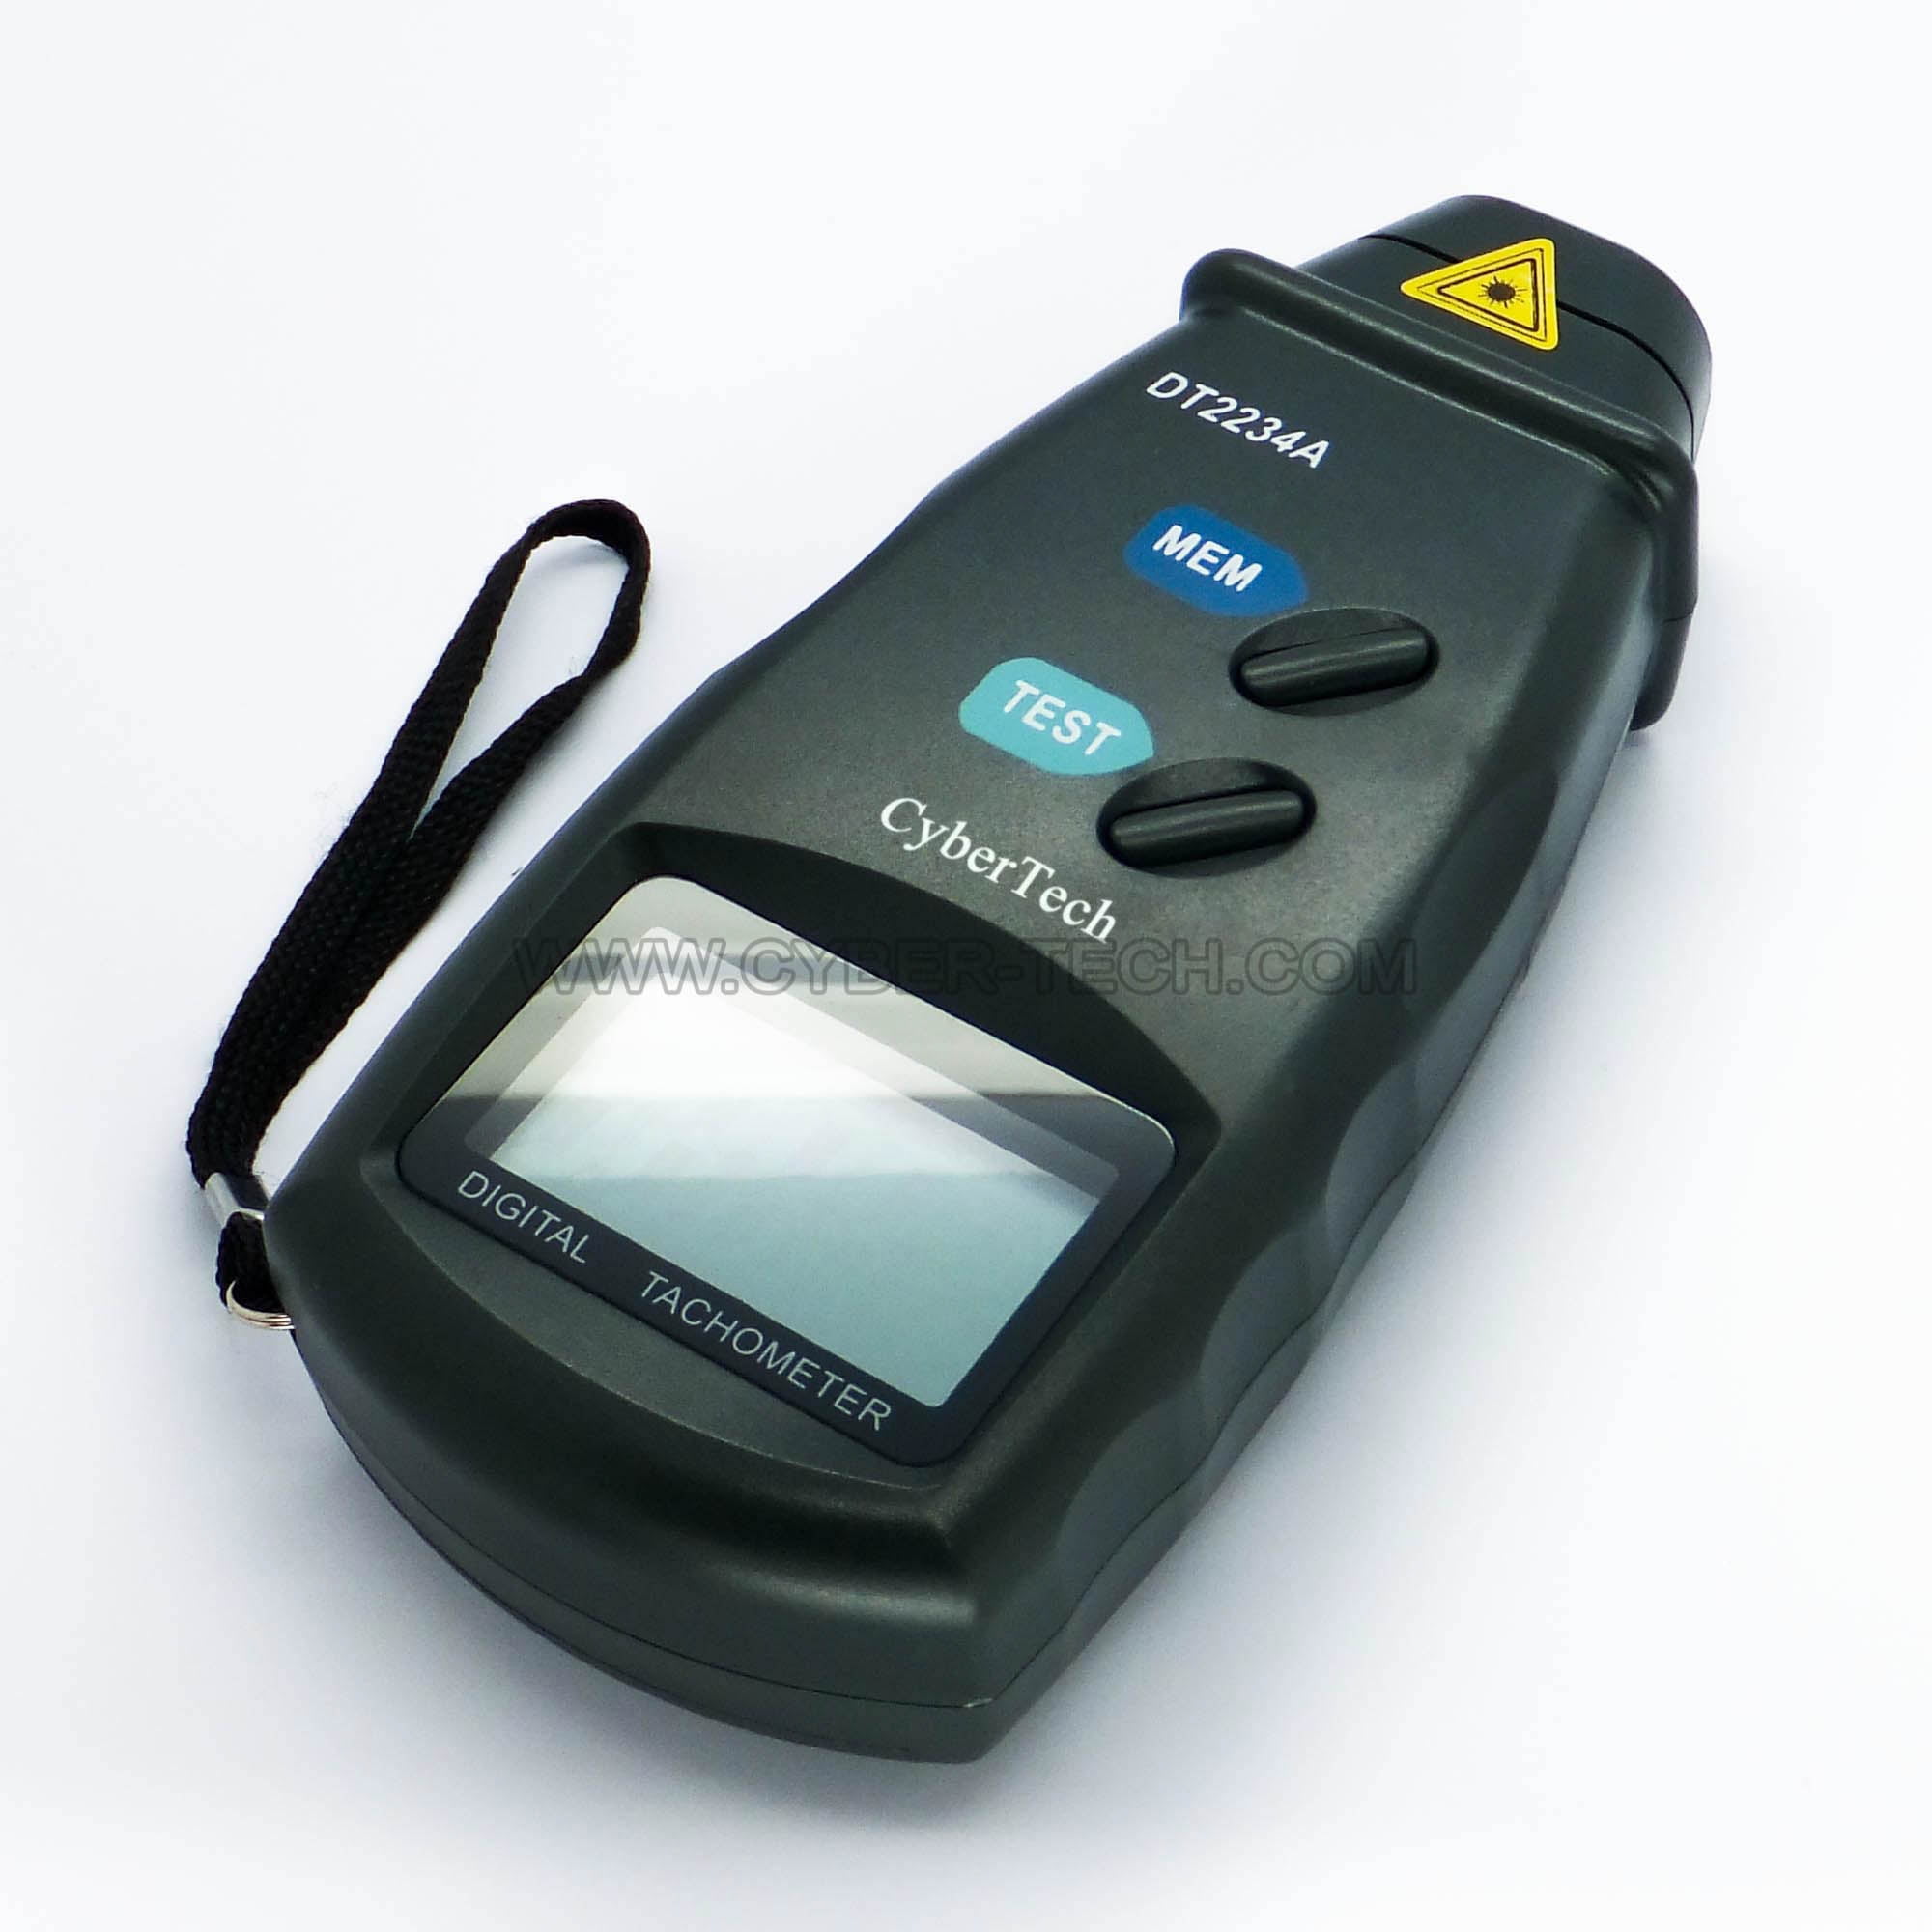 Handheld Digital Laser Tachometer Non Contact Speed Meter Gauge RPM Tach Tester 